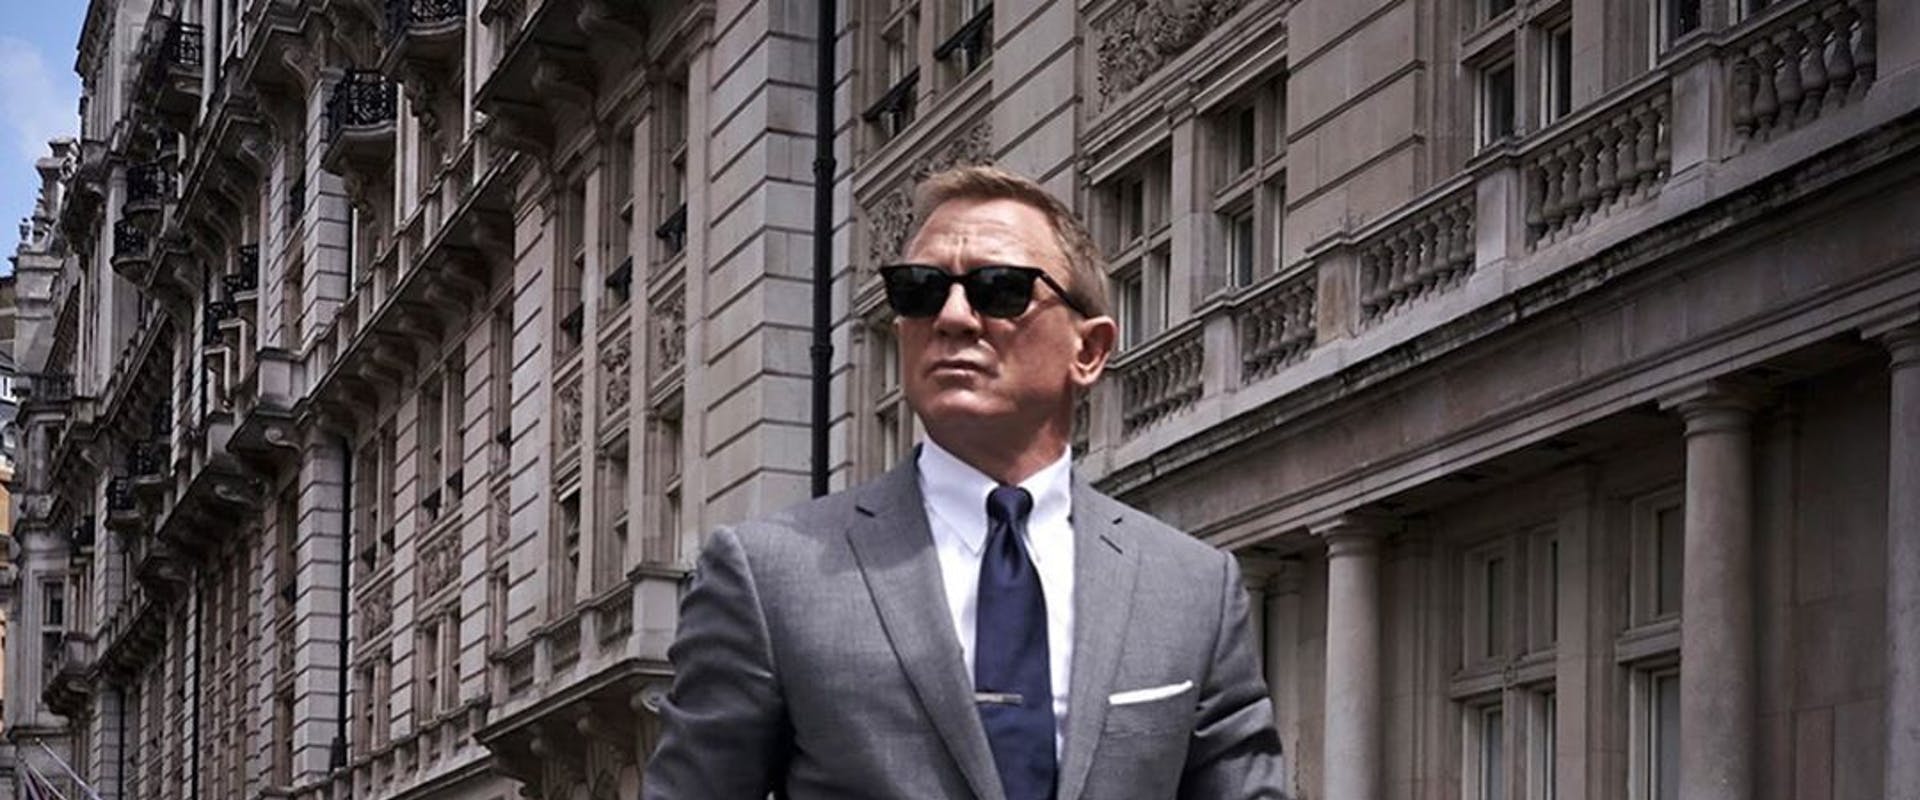 accessories tie clothing apparel person coat overcoat suit sunglasses man